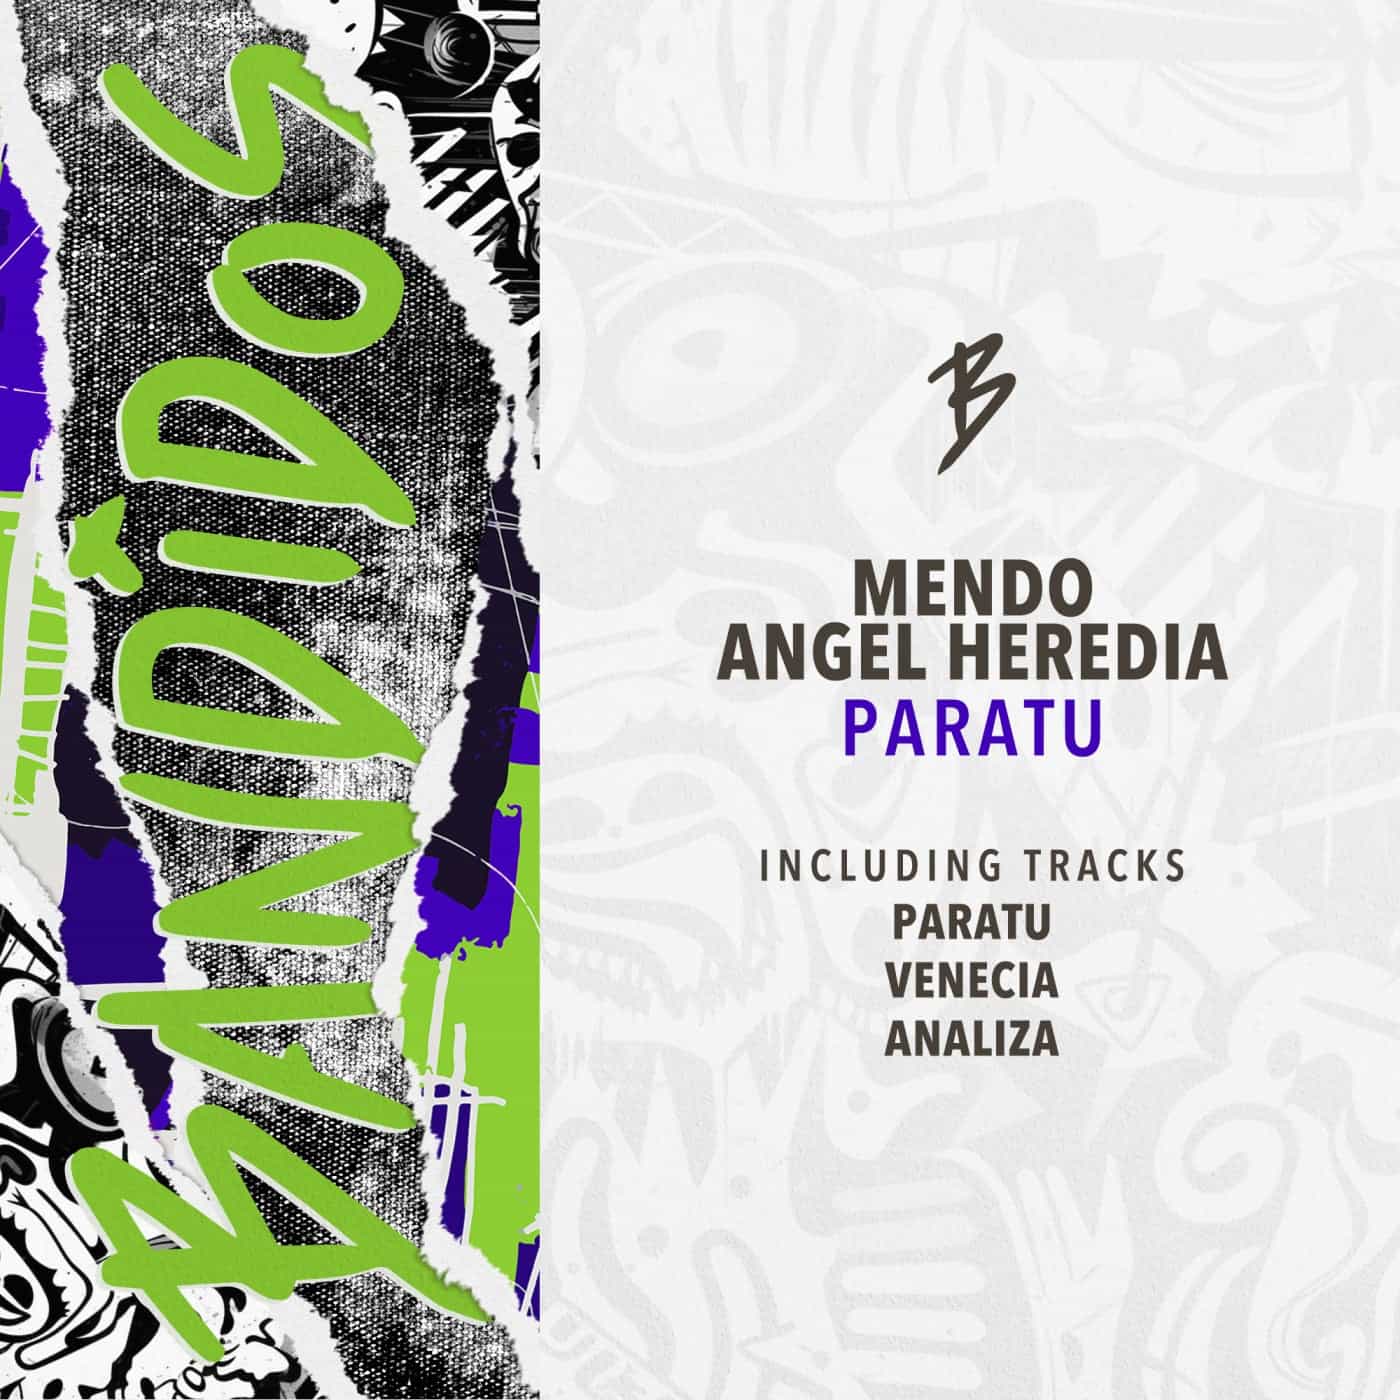 image cover: Mendo, Angel Heredia - Paratu EP on BANDIDOS